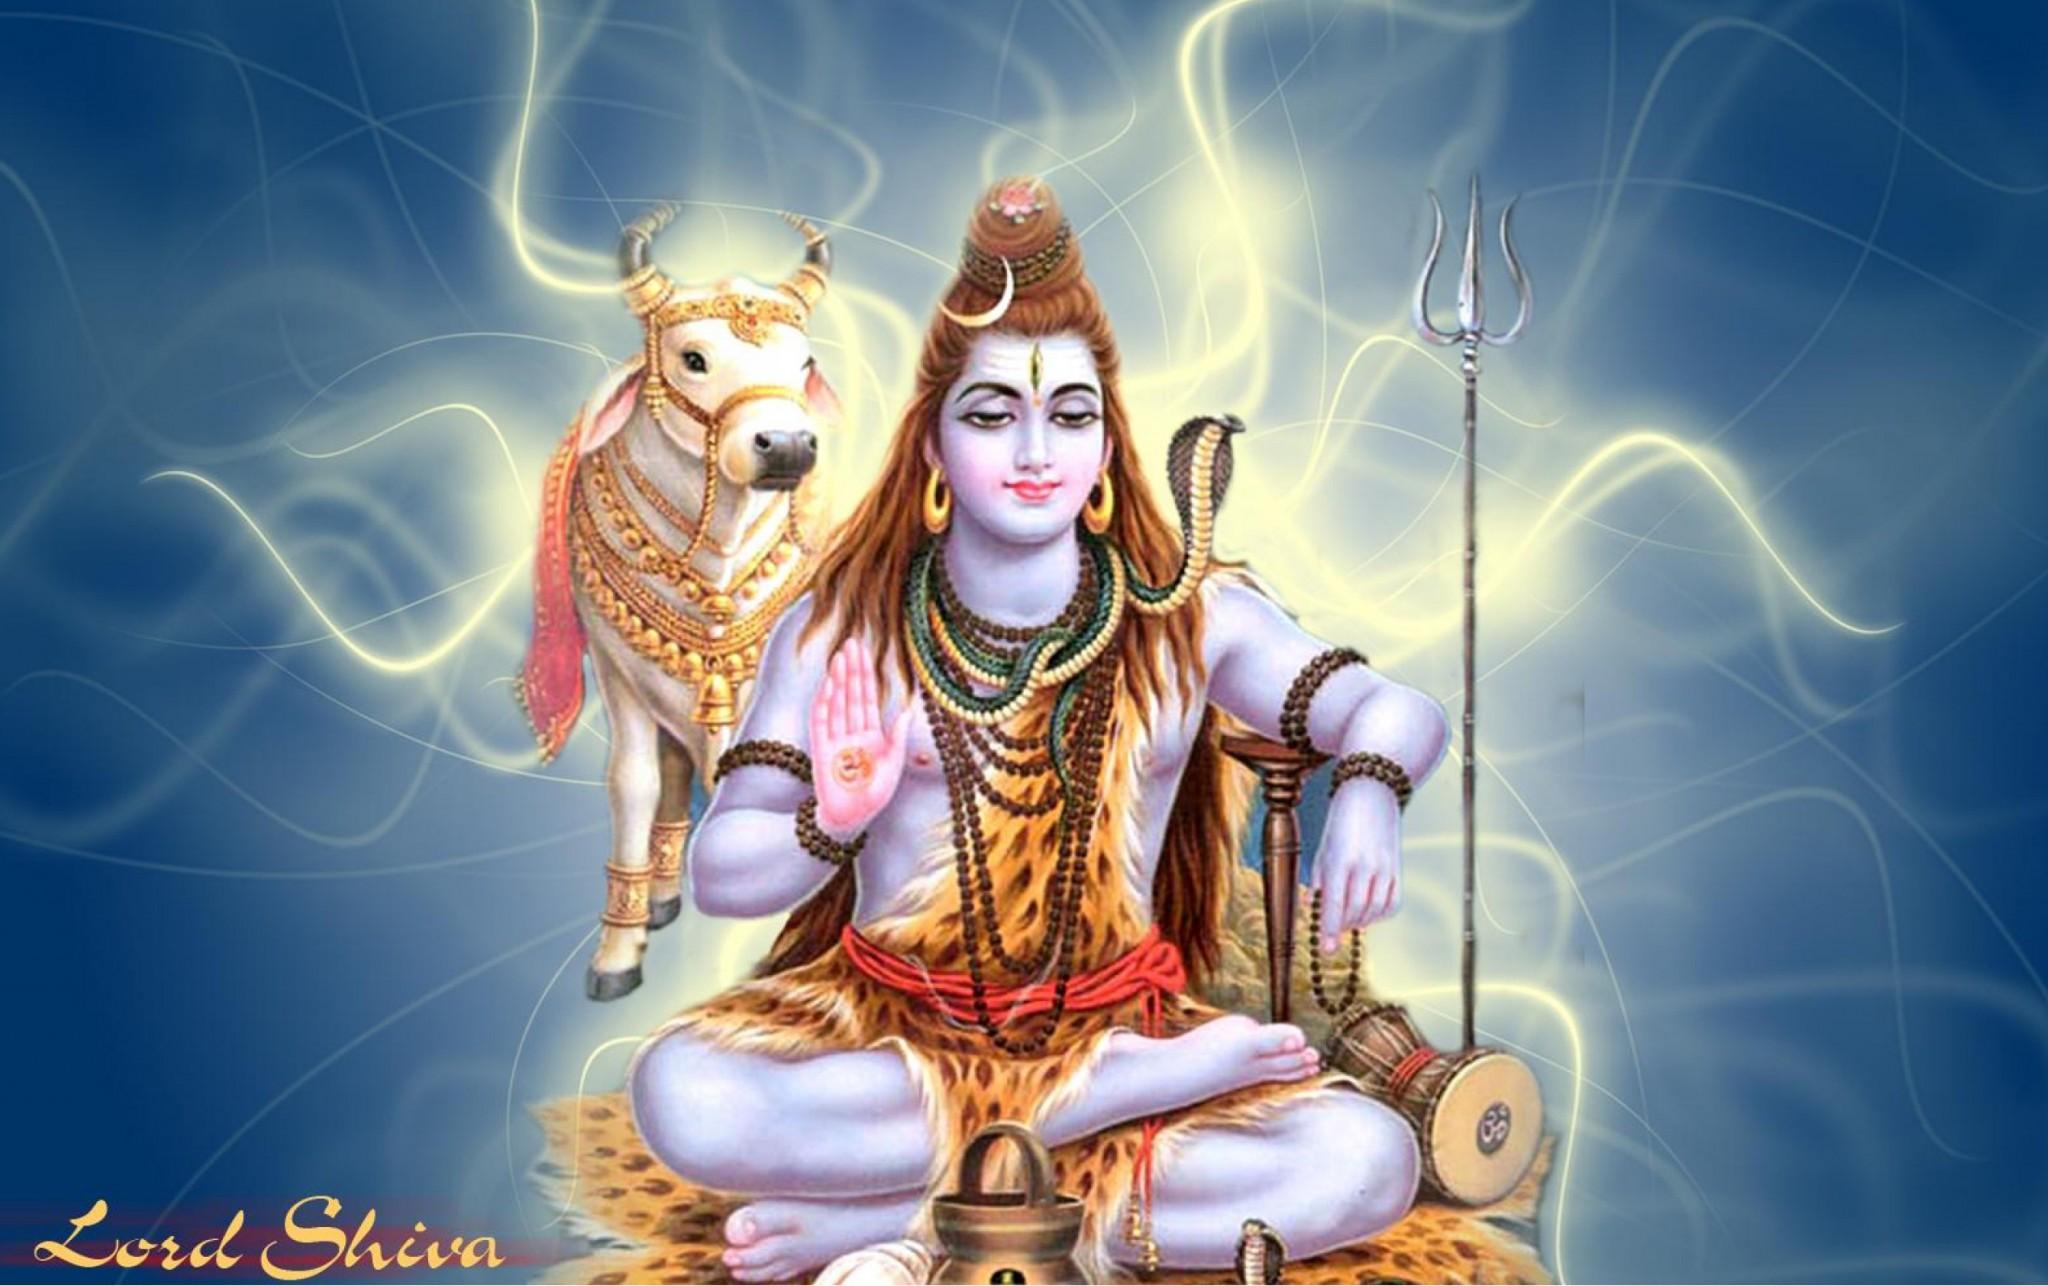 Lord Shiva Image [Wallpaper] & God Shiva Photo in HD Quality